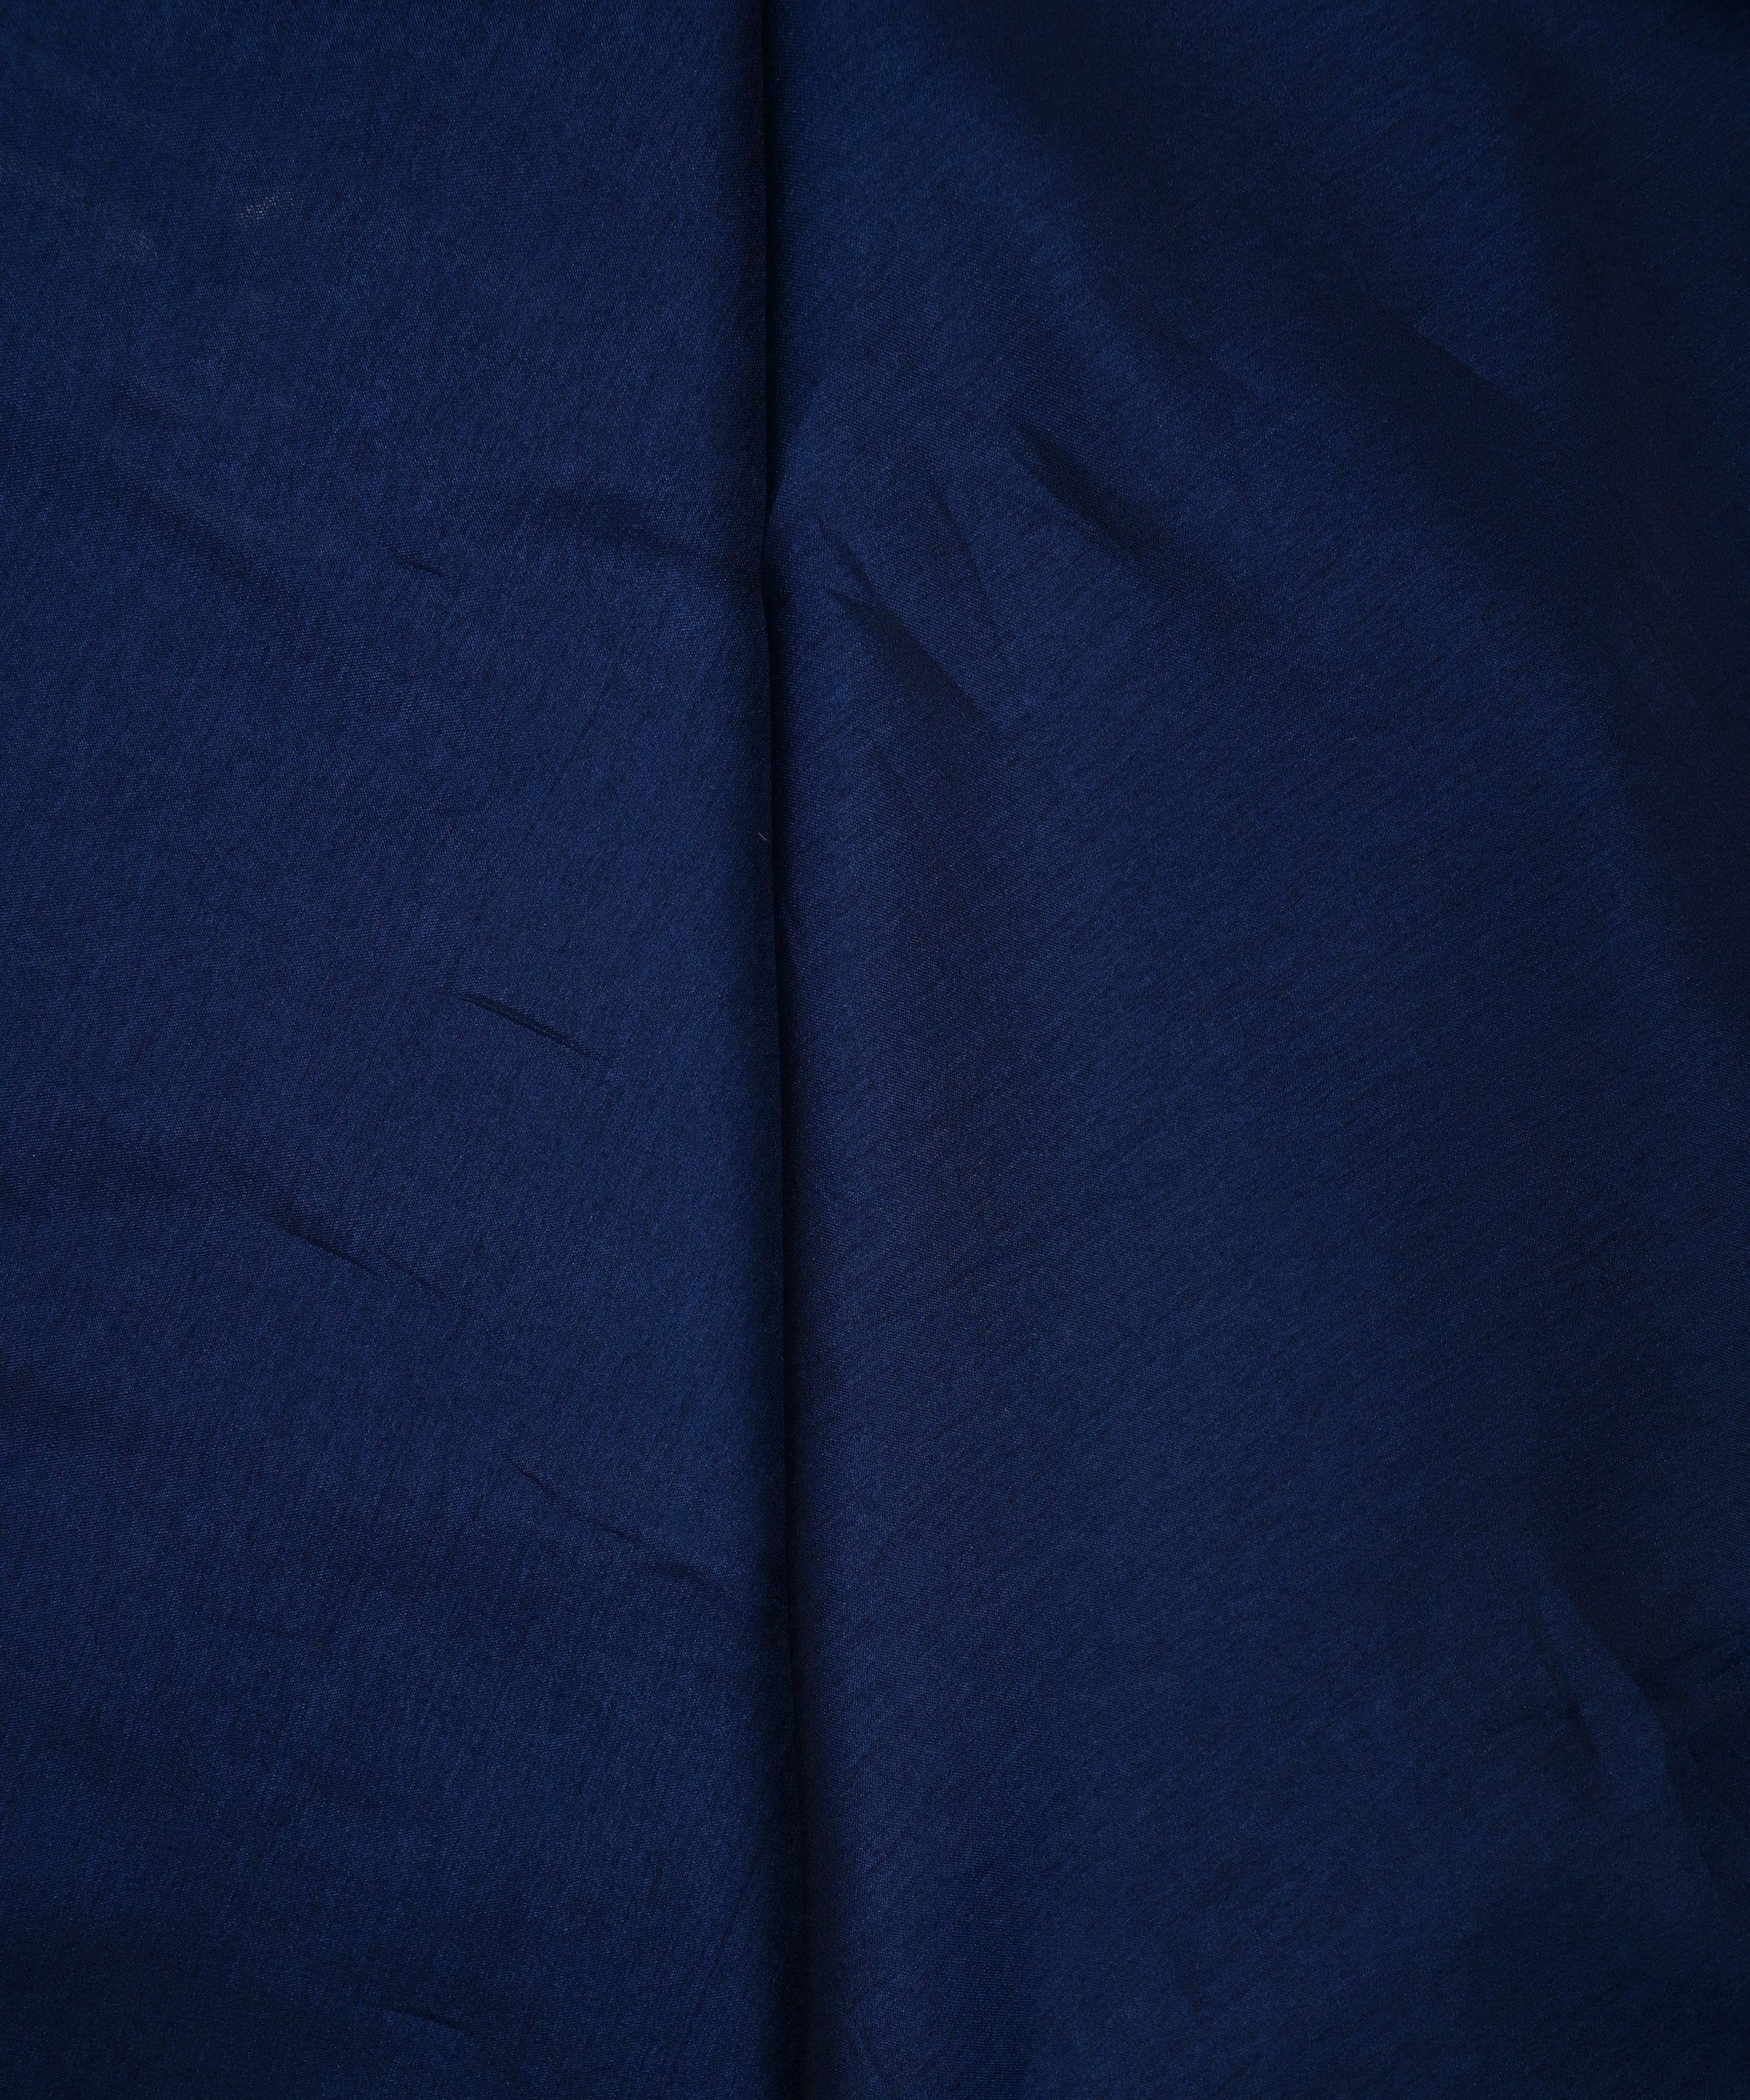 Navy Blue Plain Dyed Tussar Silk Fabric